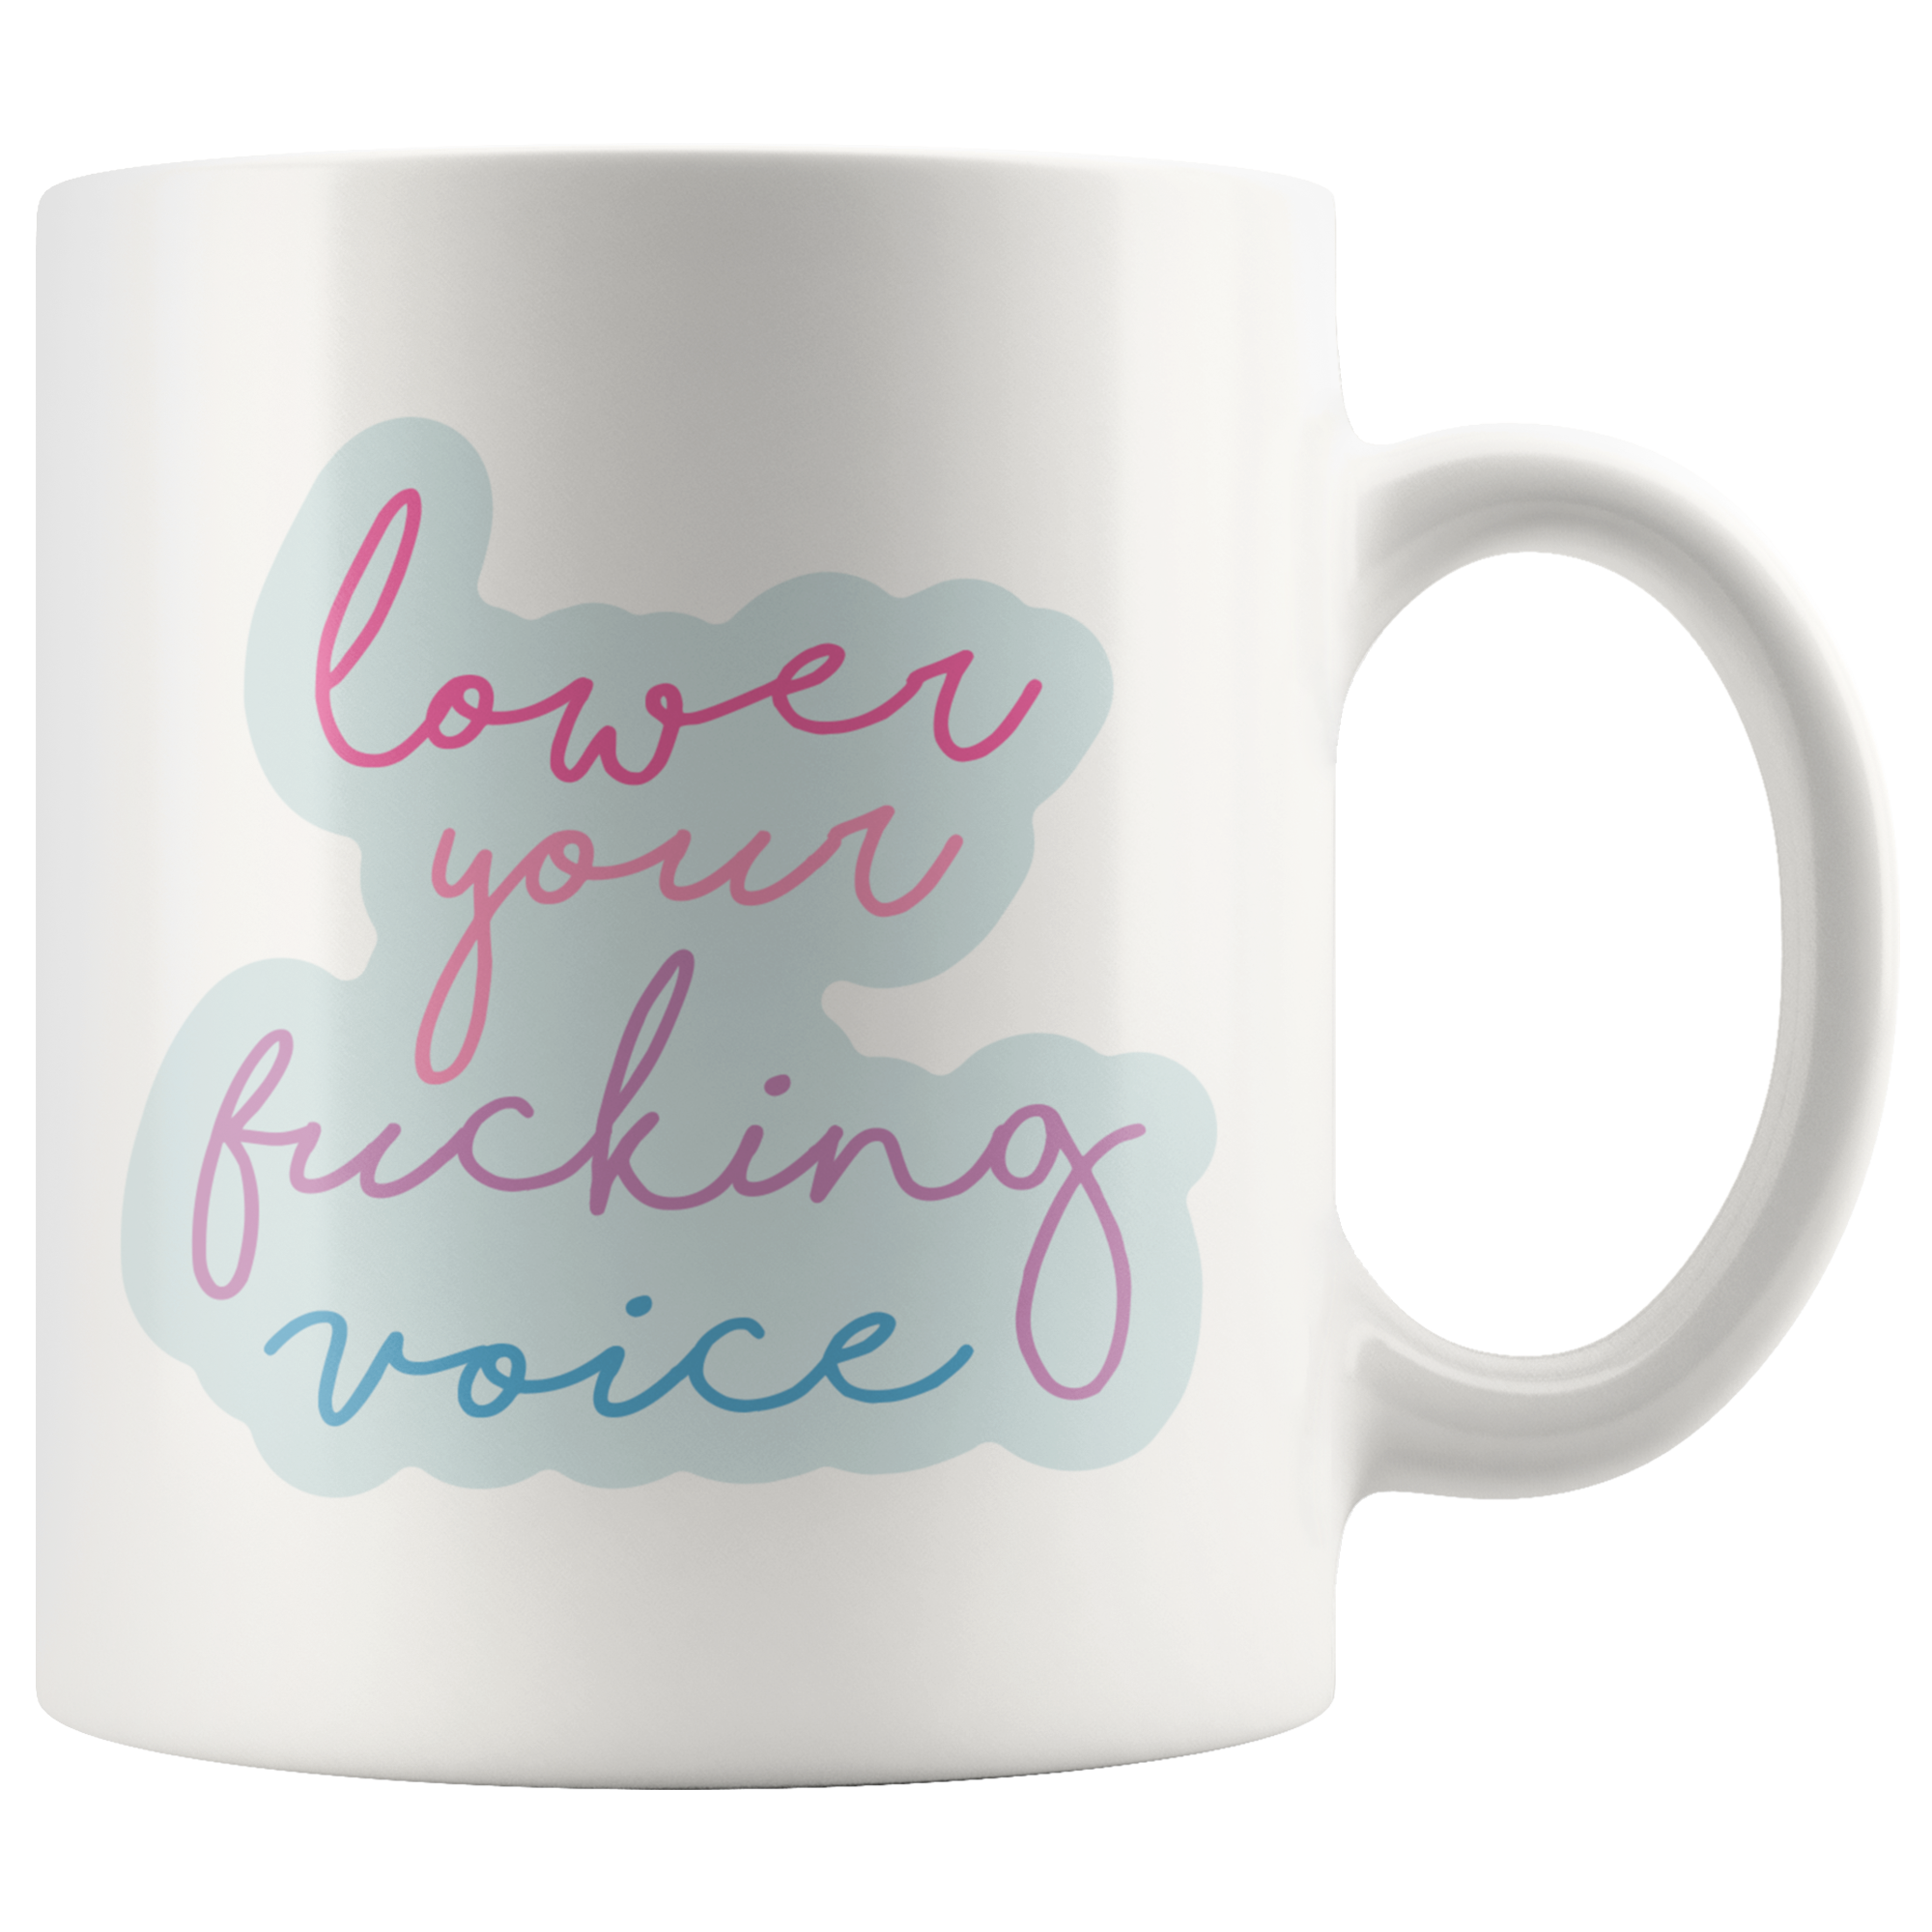 Lower Your Voice Coffee Mug